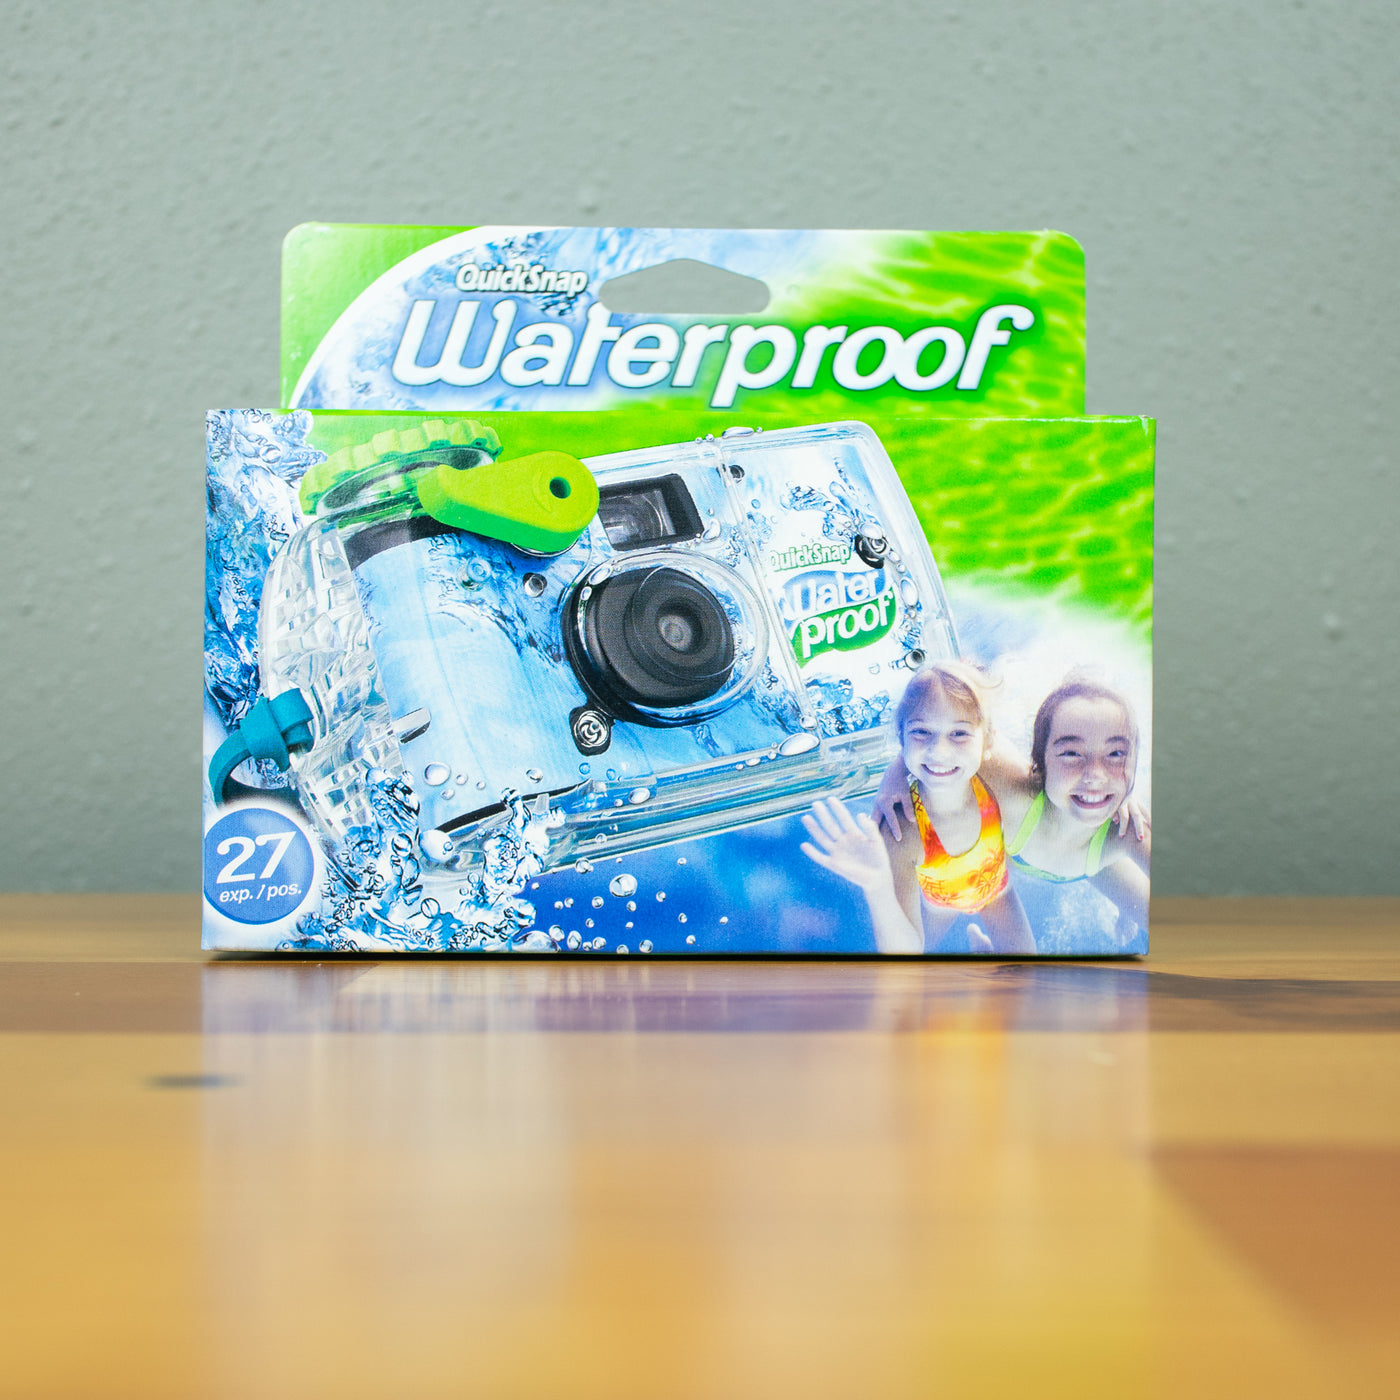 Fuji Quicksnap Waterproof Camera 27 Exposure